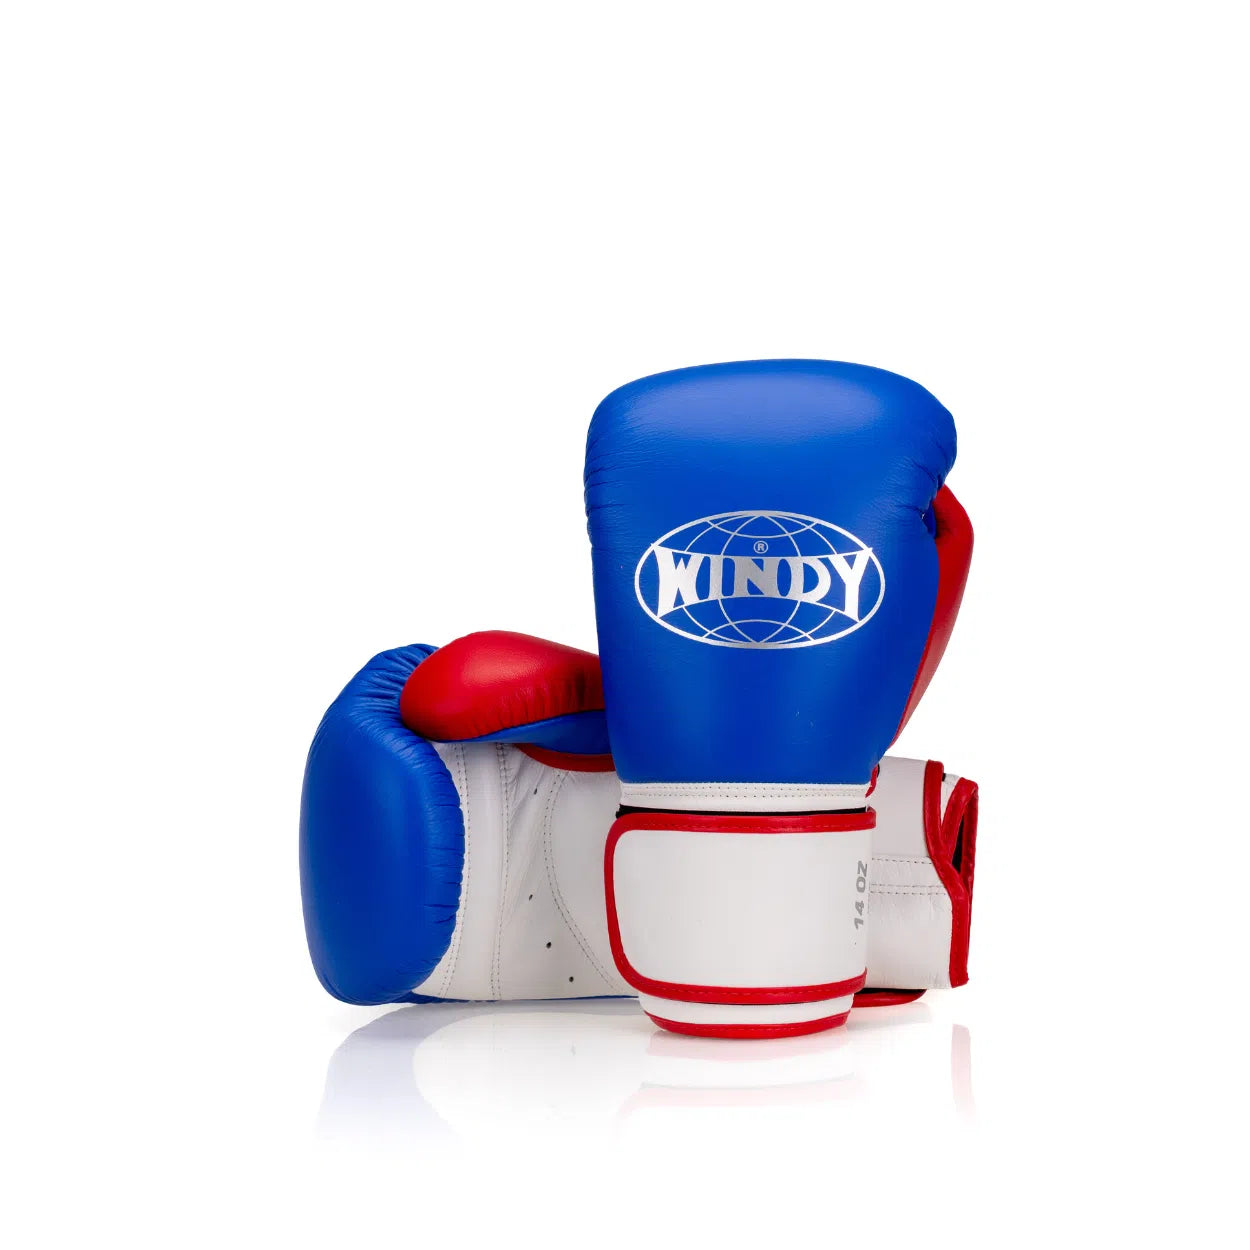 Elite Series Velcro Boxing Glove - Blue/Red/White